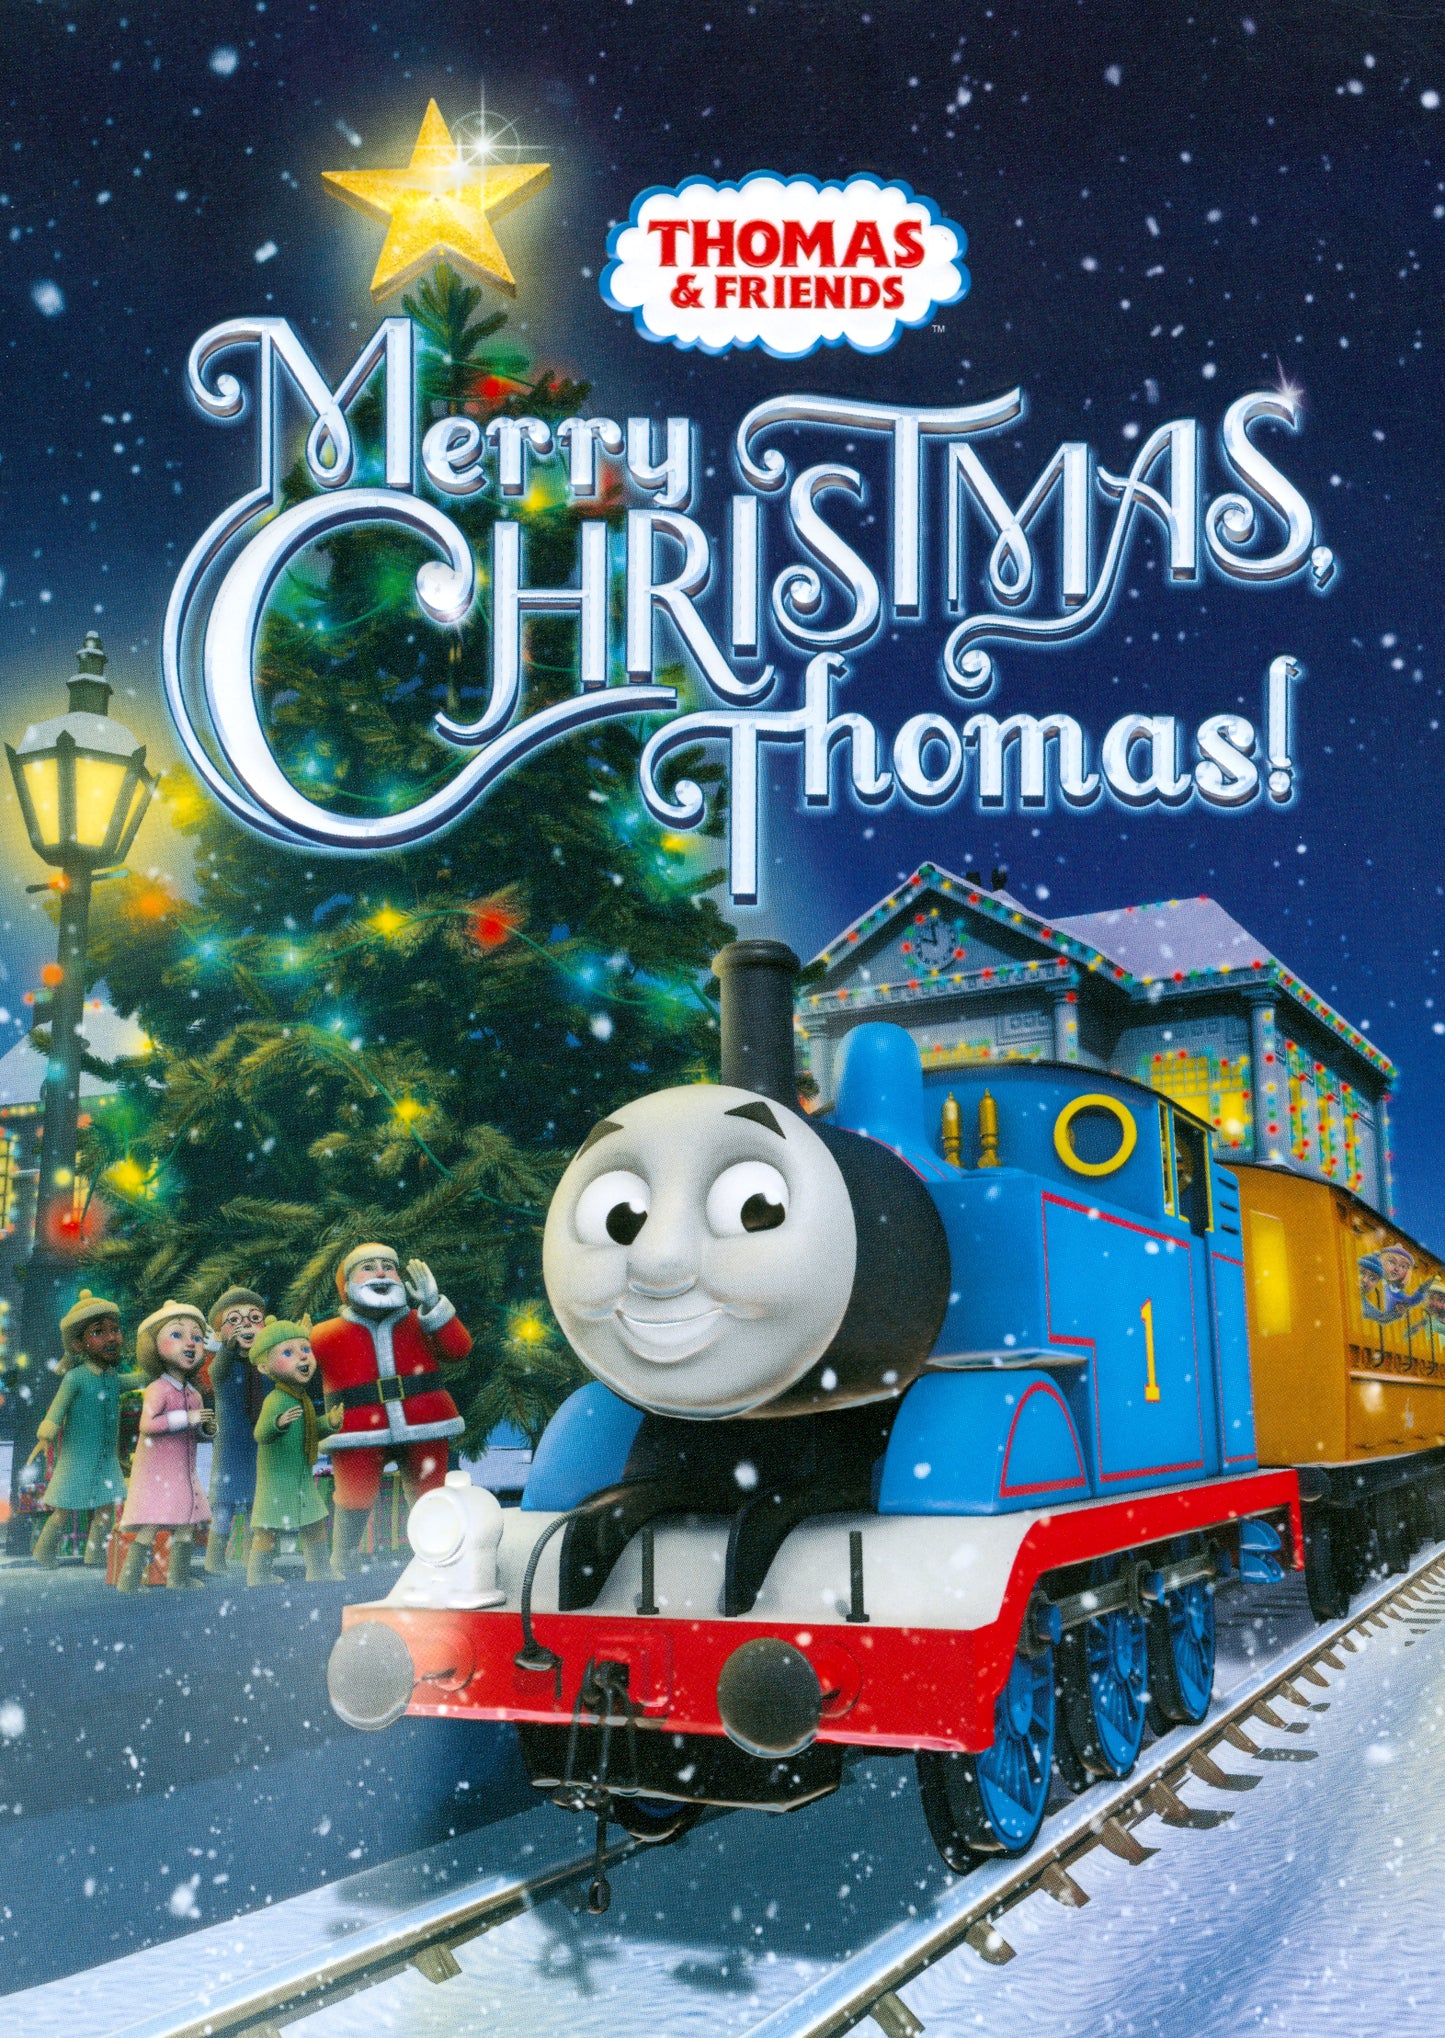 Thomas & Friends: Merry Christmas, Thomas! cover art